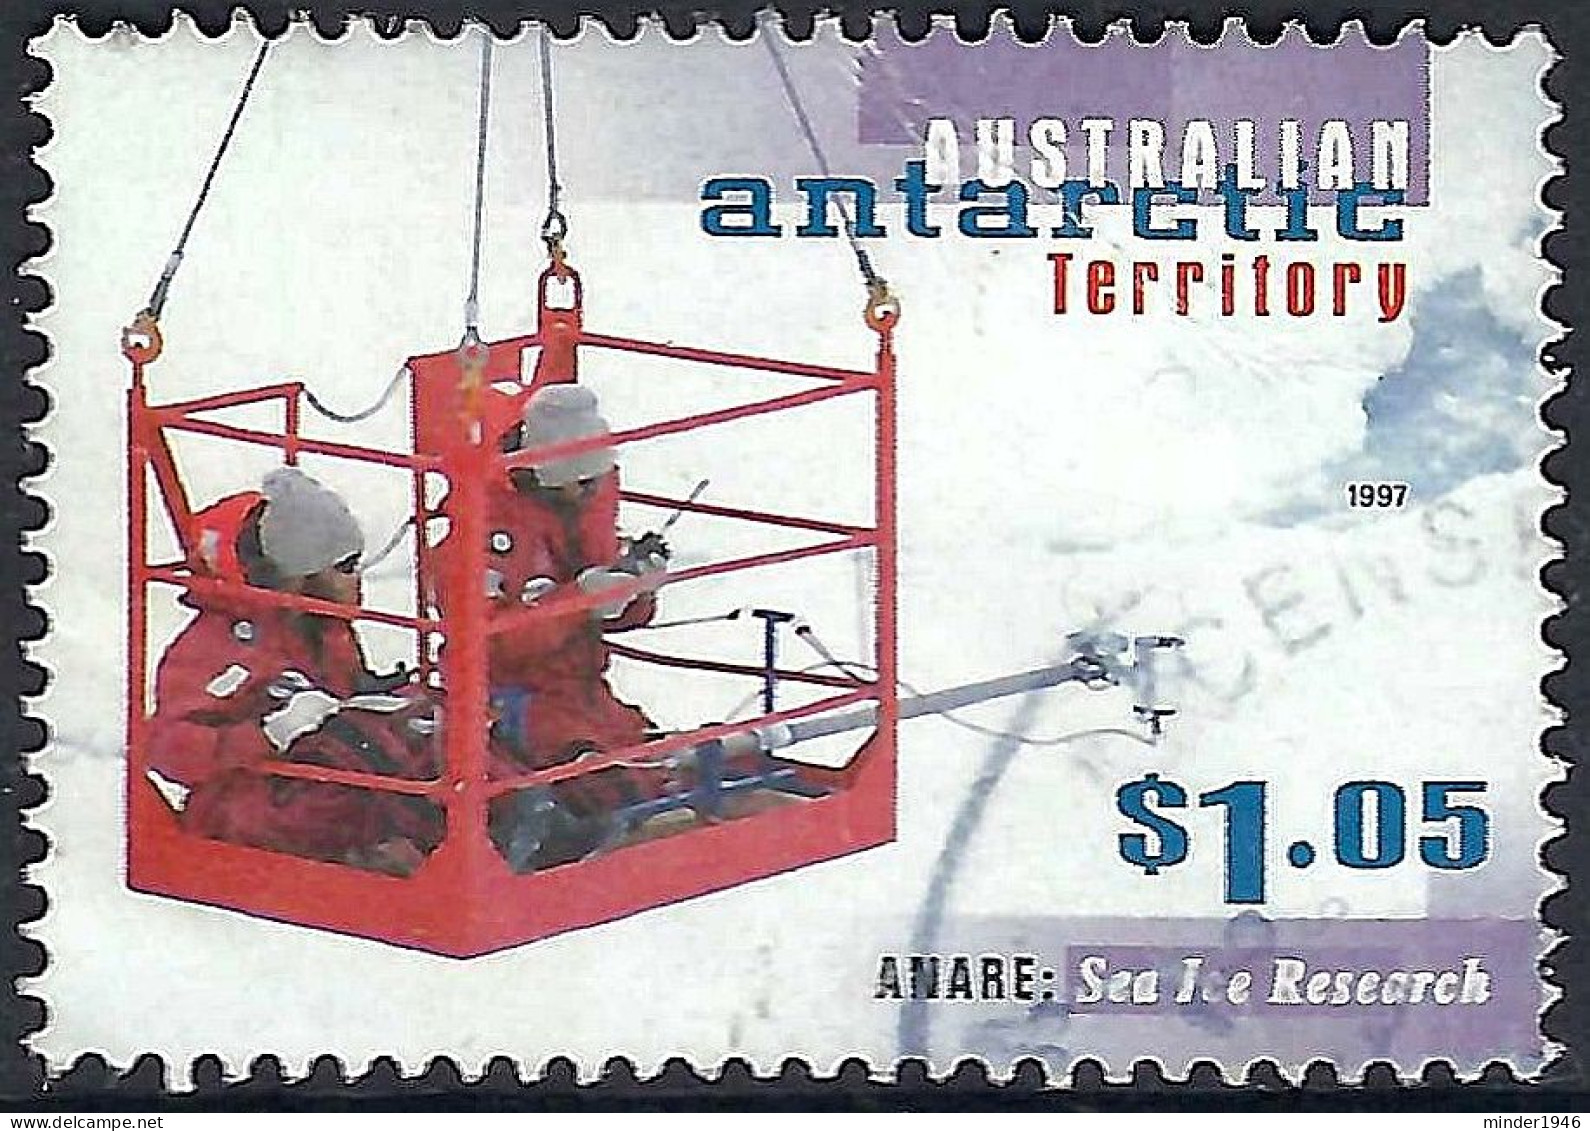 AUSTRALIAN ANTARCTIC TERRITORY (AAT) 1997 QEII 75c Multicoloured, ANARE: Sea Ice Research Station SG120 FU - Used Stamps